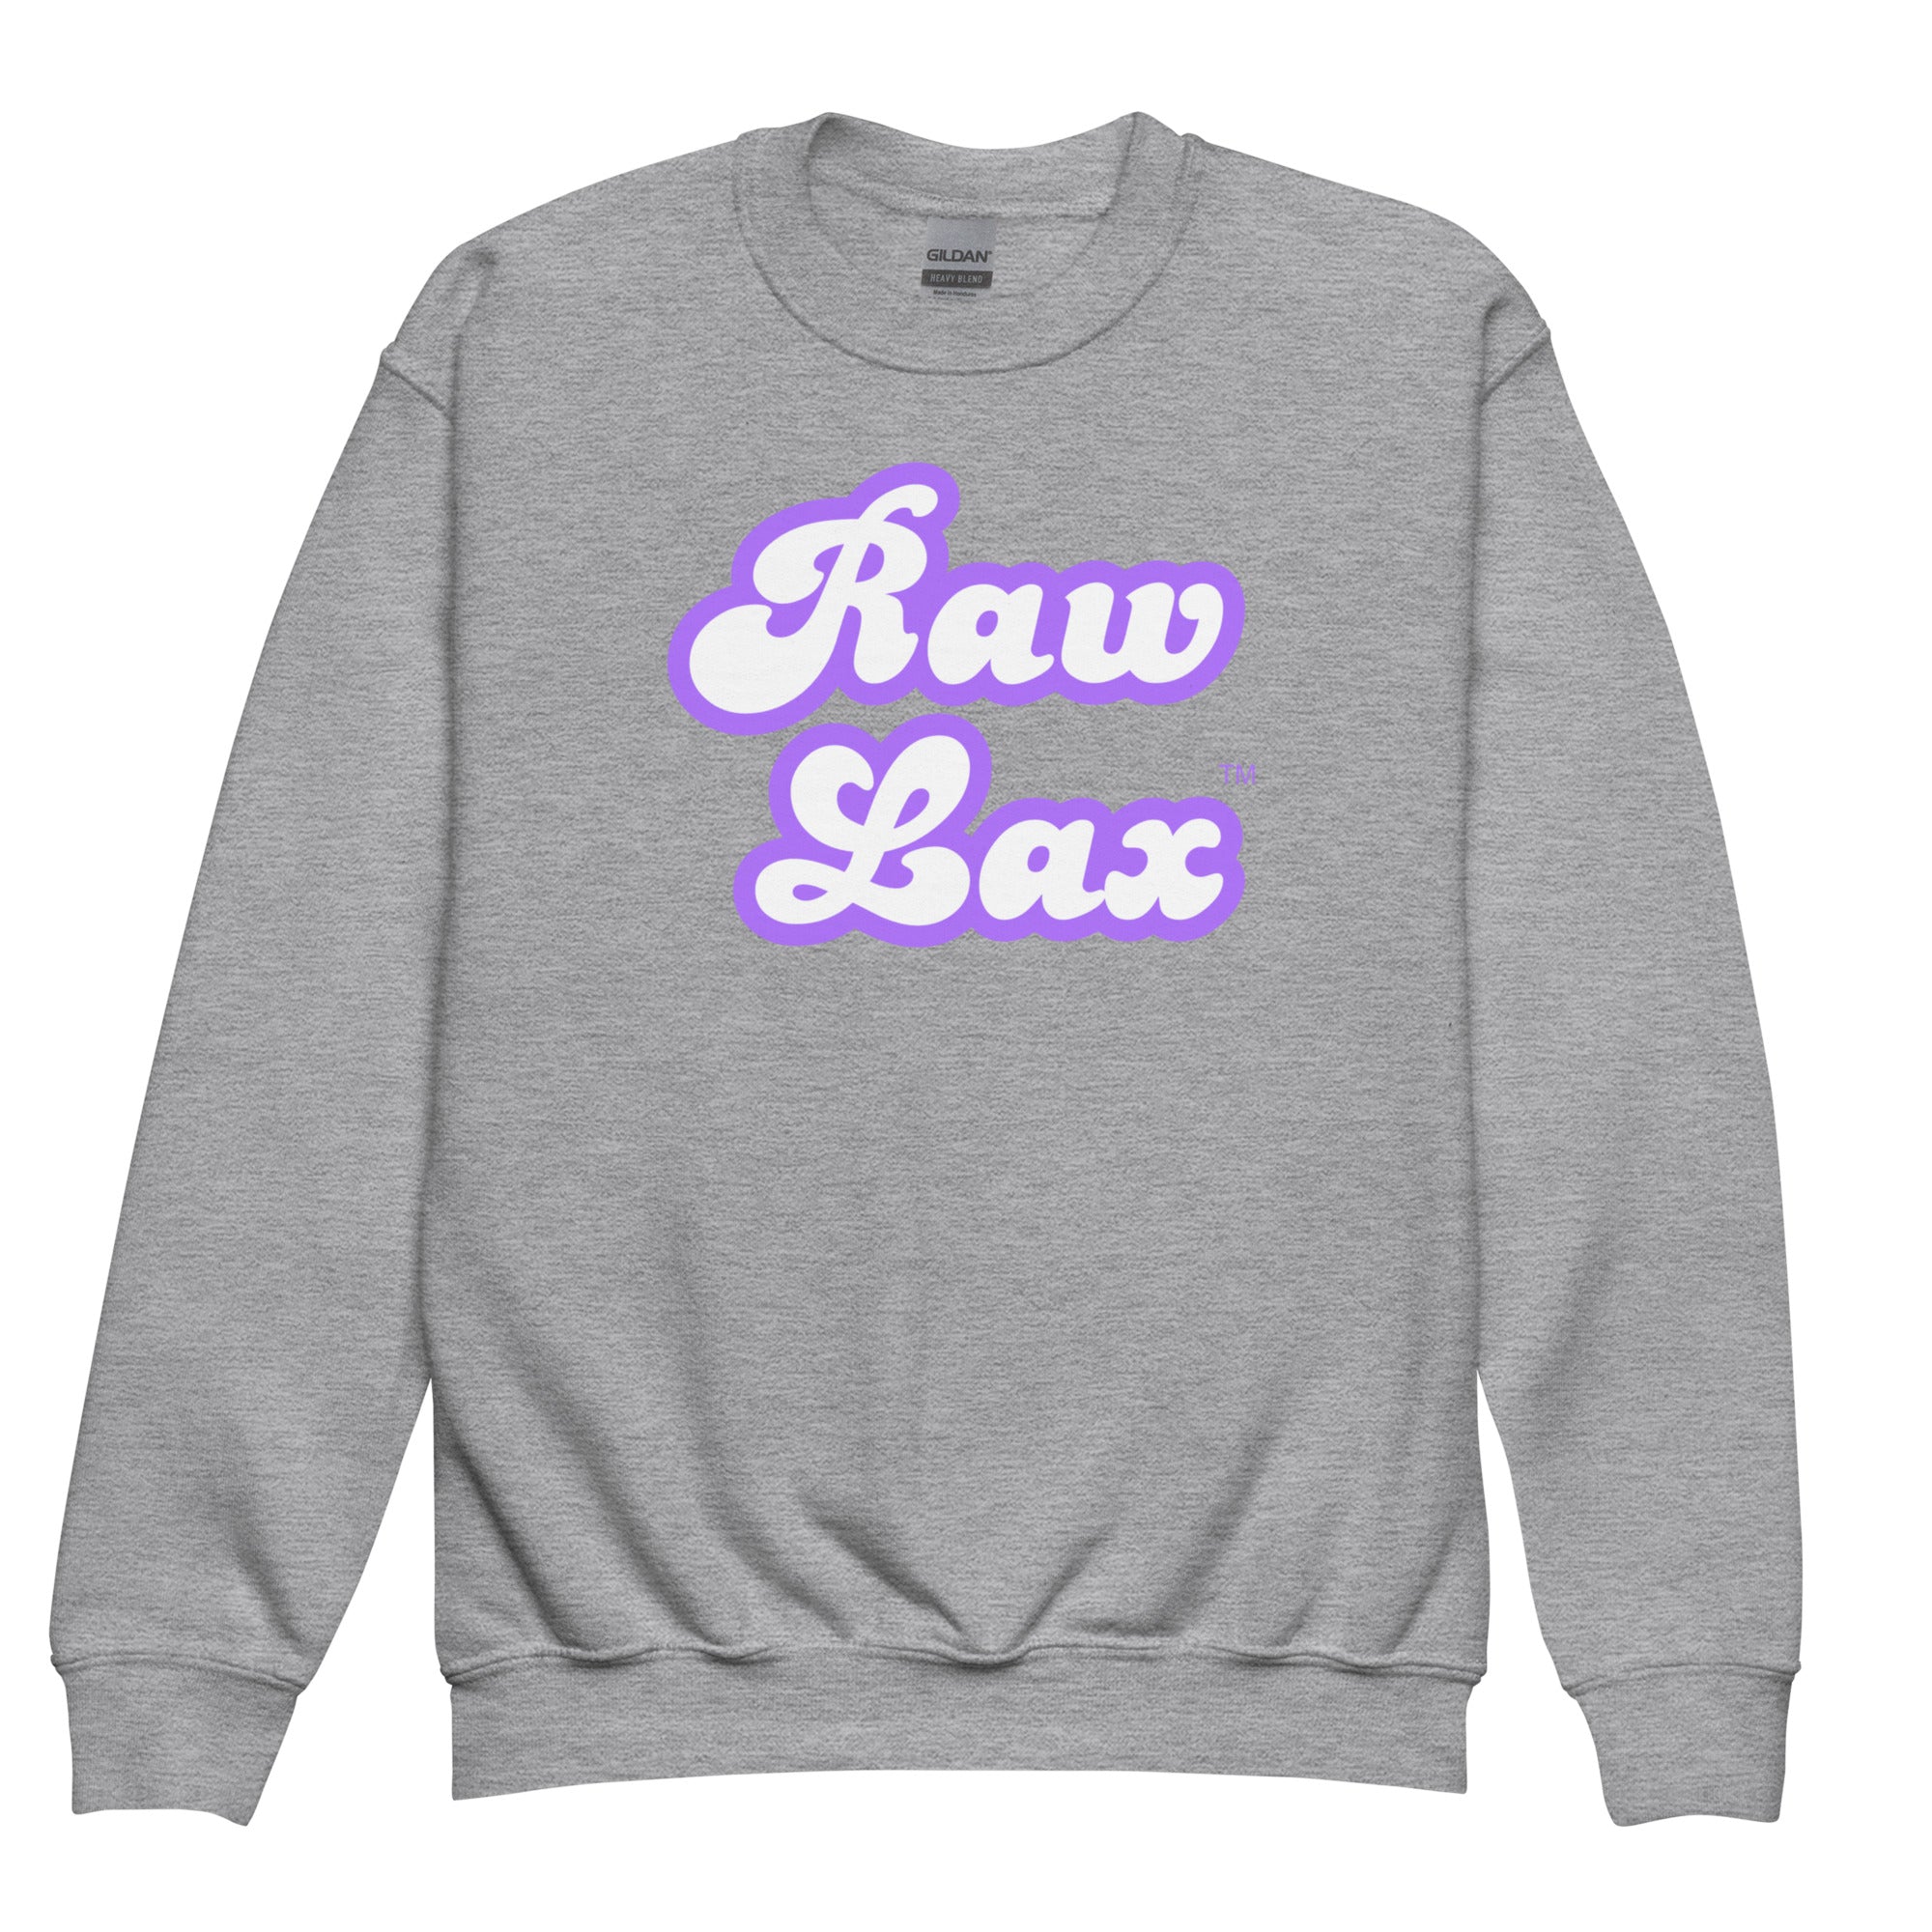 Raw Lax Youth crewneck sweatshirt